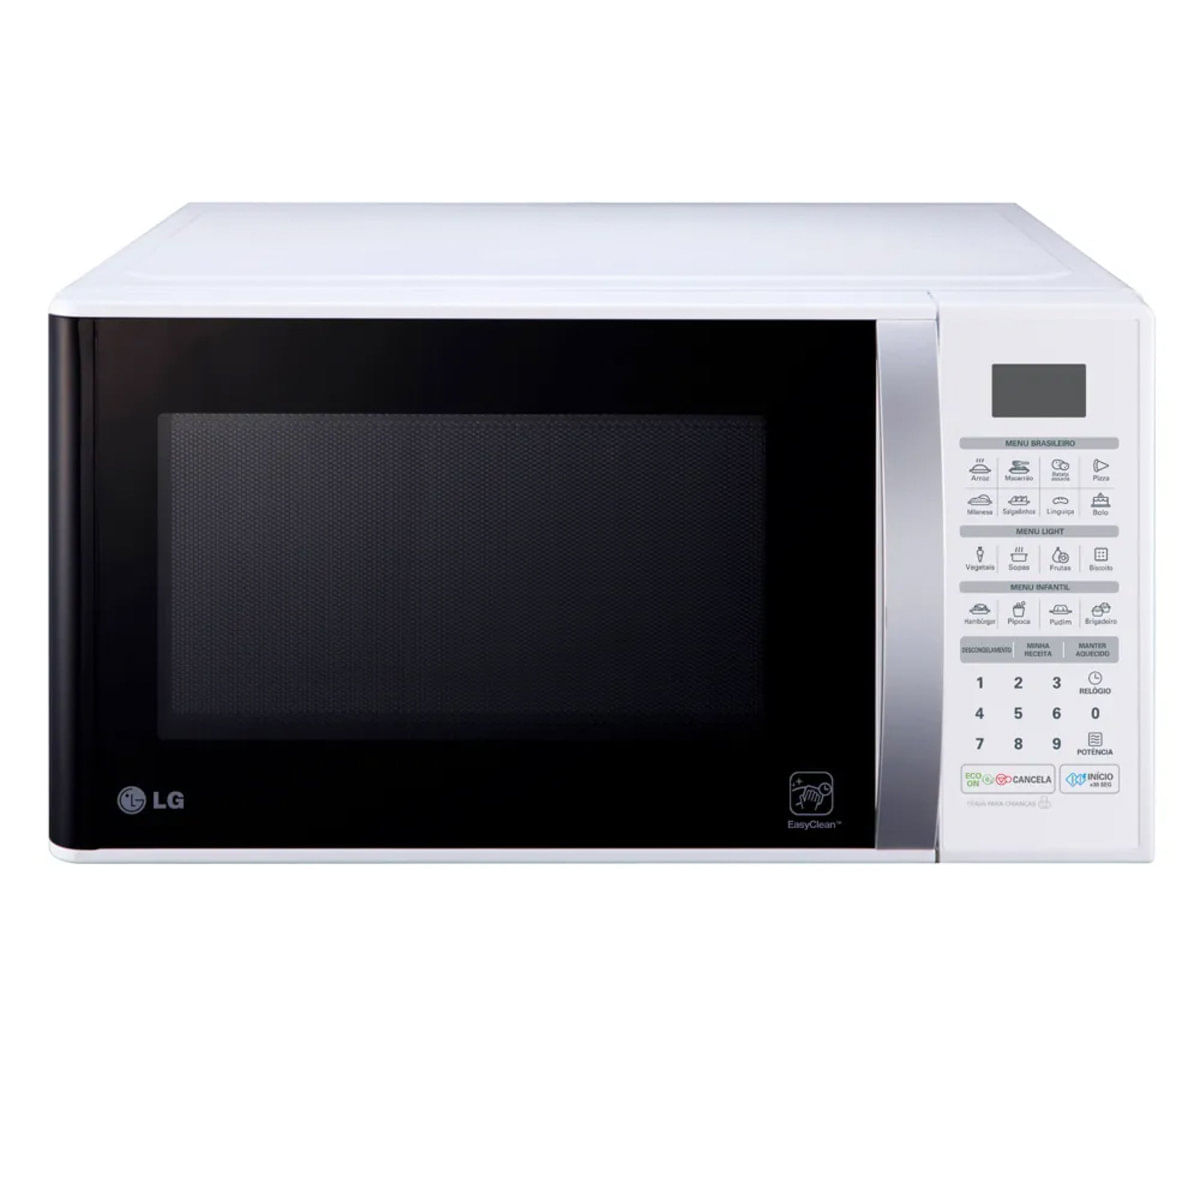 Menor preço em Micro-ondas LG EasyClean MS3052RA 30 Litros Branco 220V